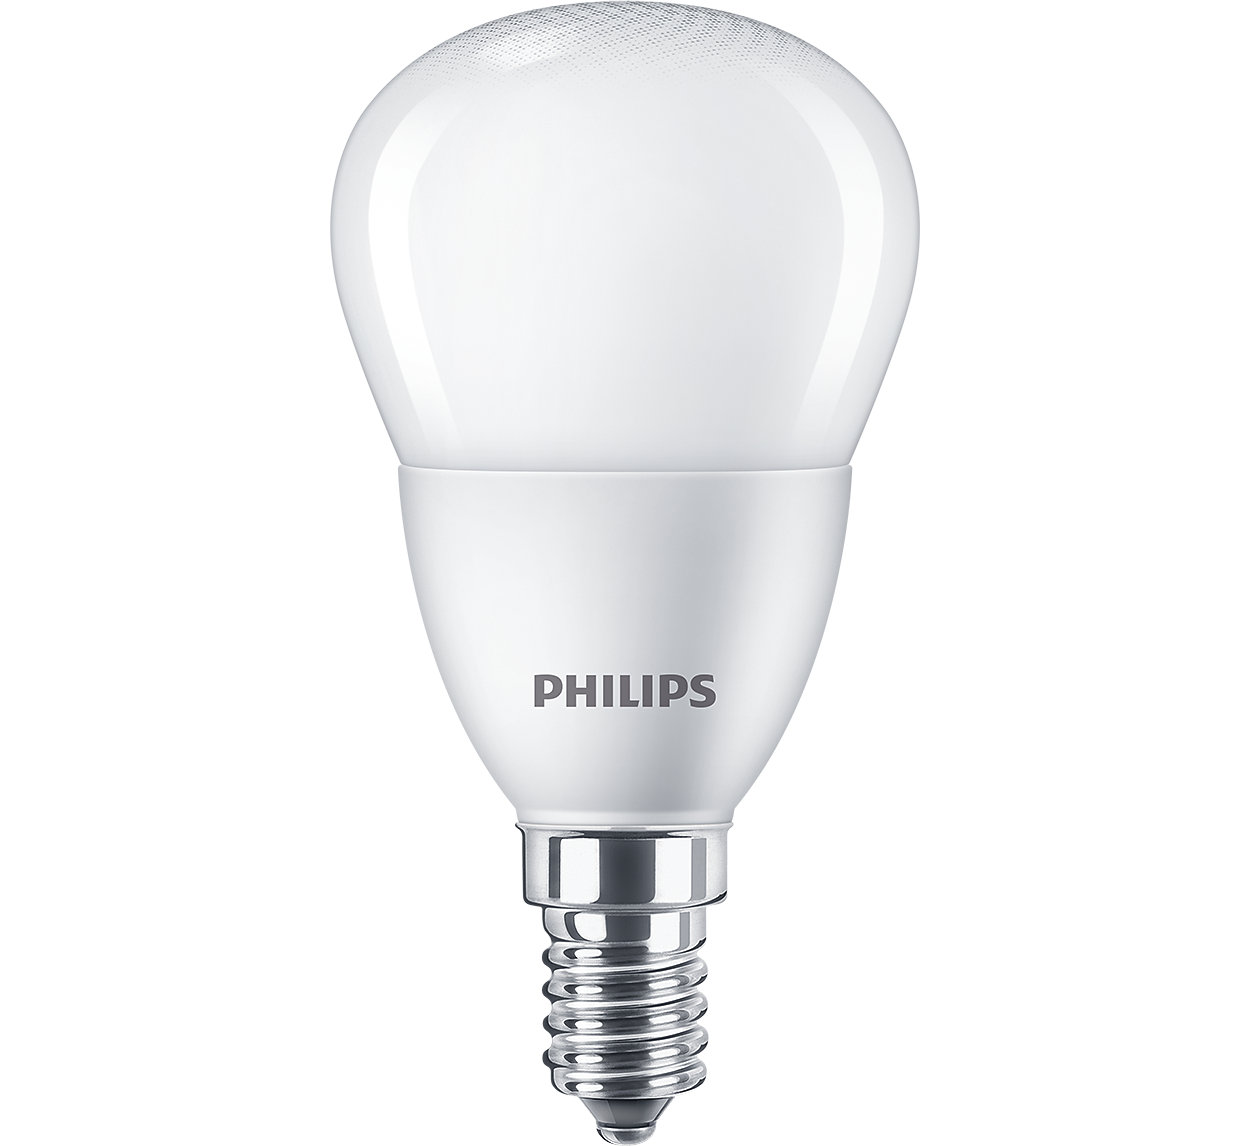 Percantik rumah Anda dengan lampu Philips LED globe